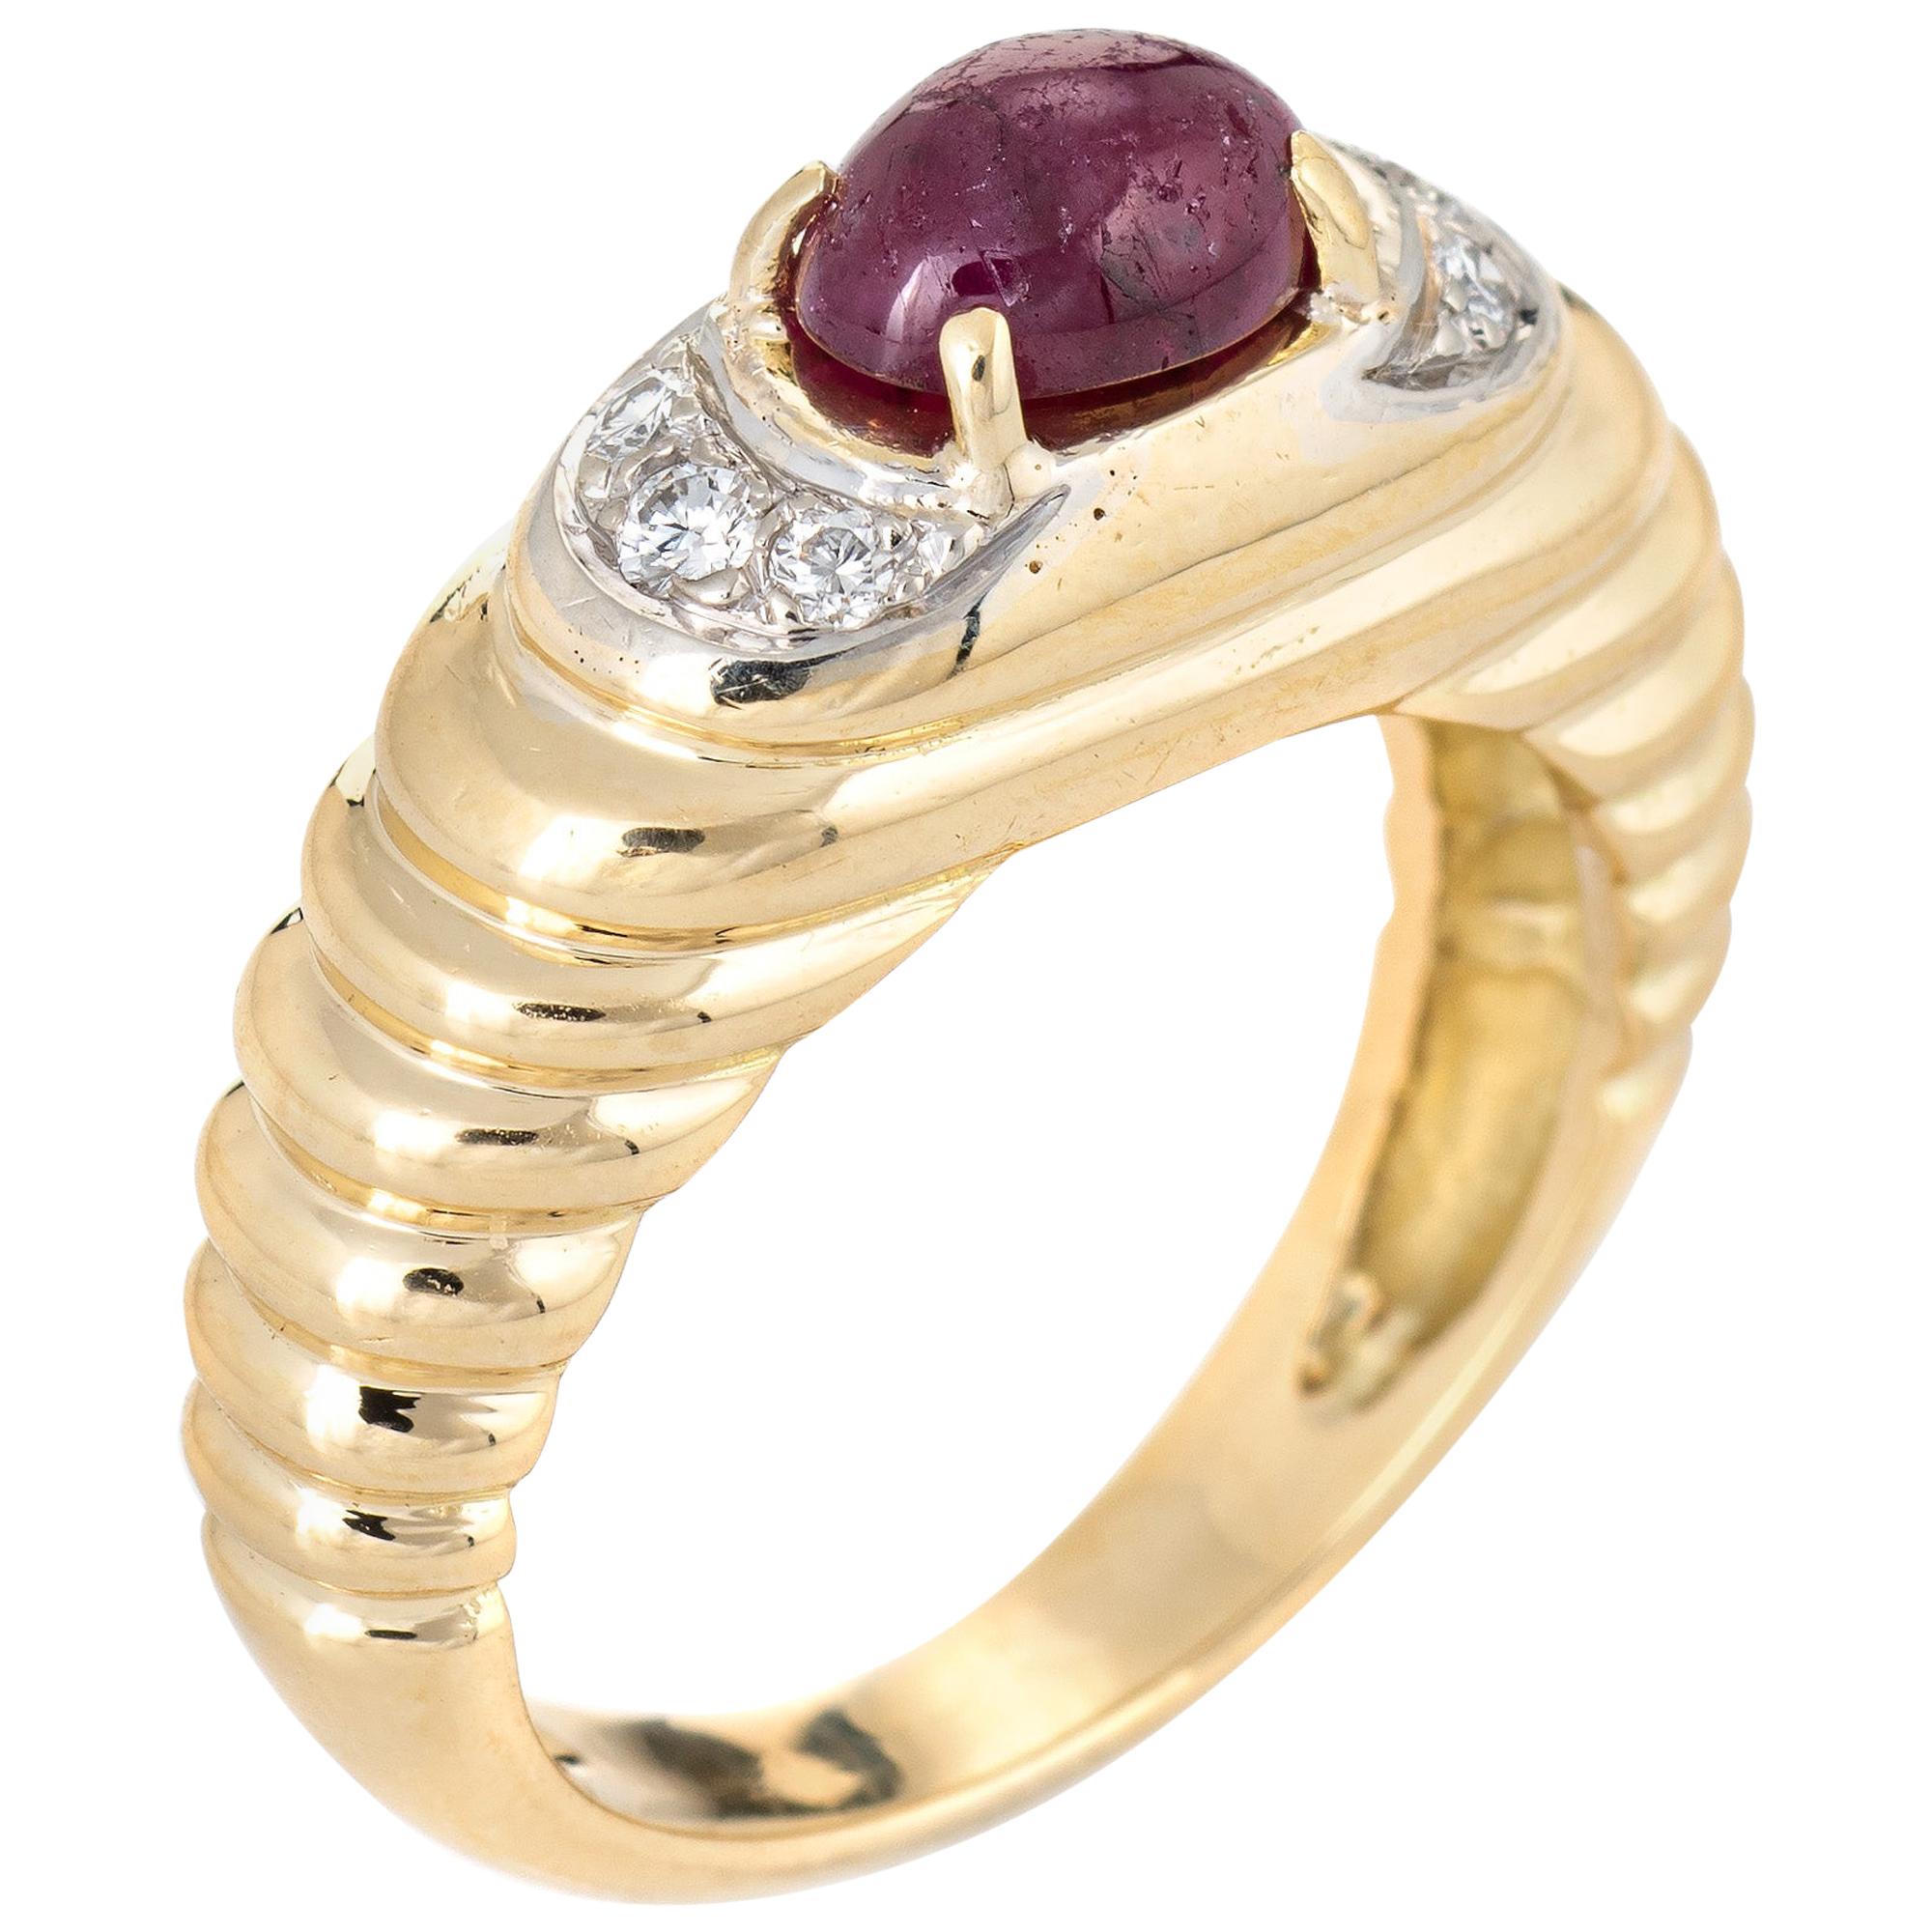 Cabochon Ruby Diamond Band Vintage 18 Karat Yellow Gold Ring Stacking Jewelry